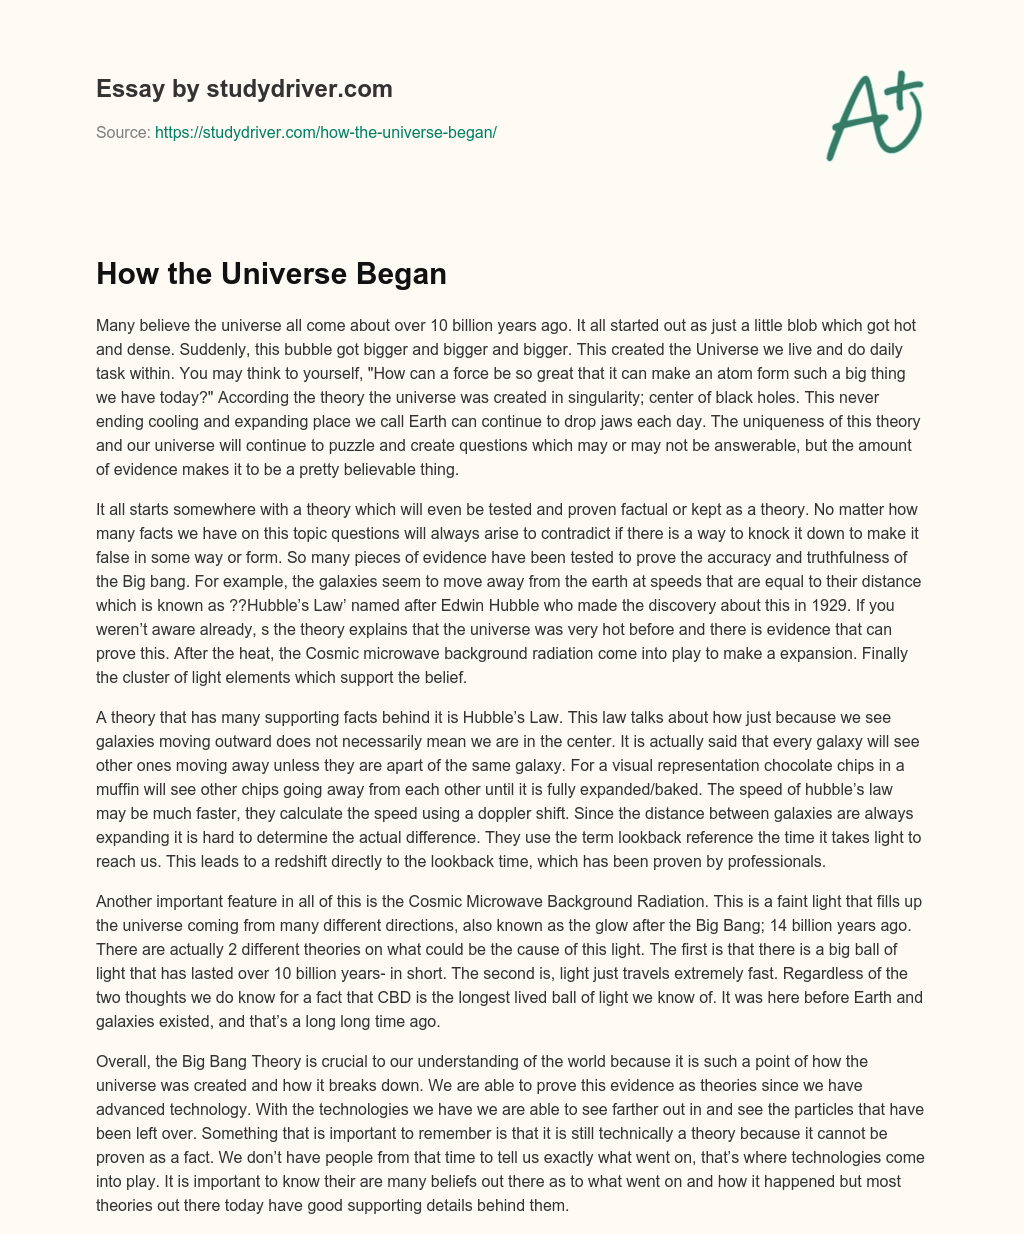 How the Universe Began essay